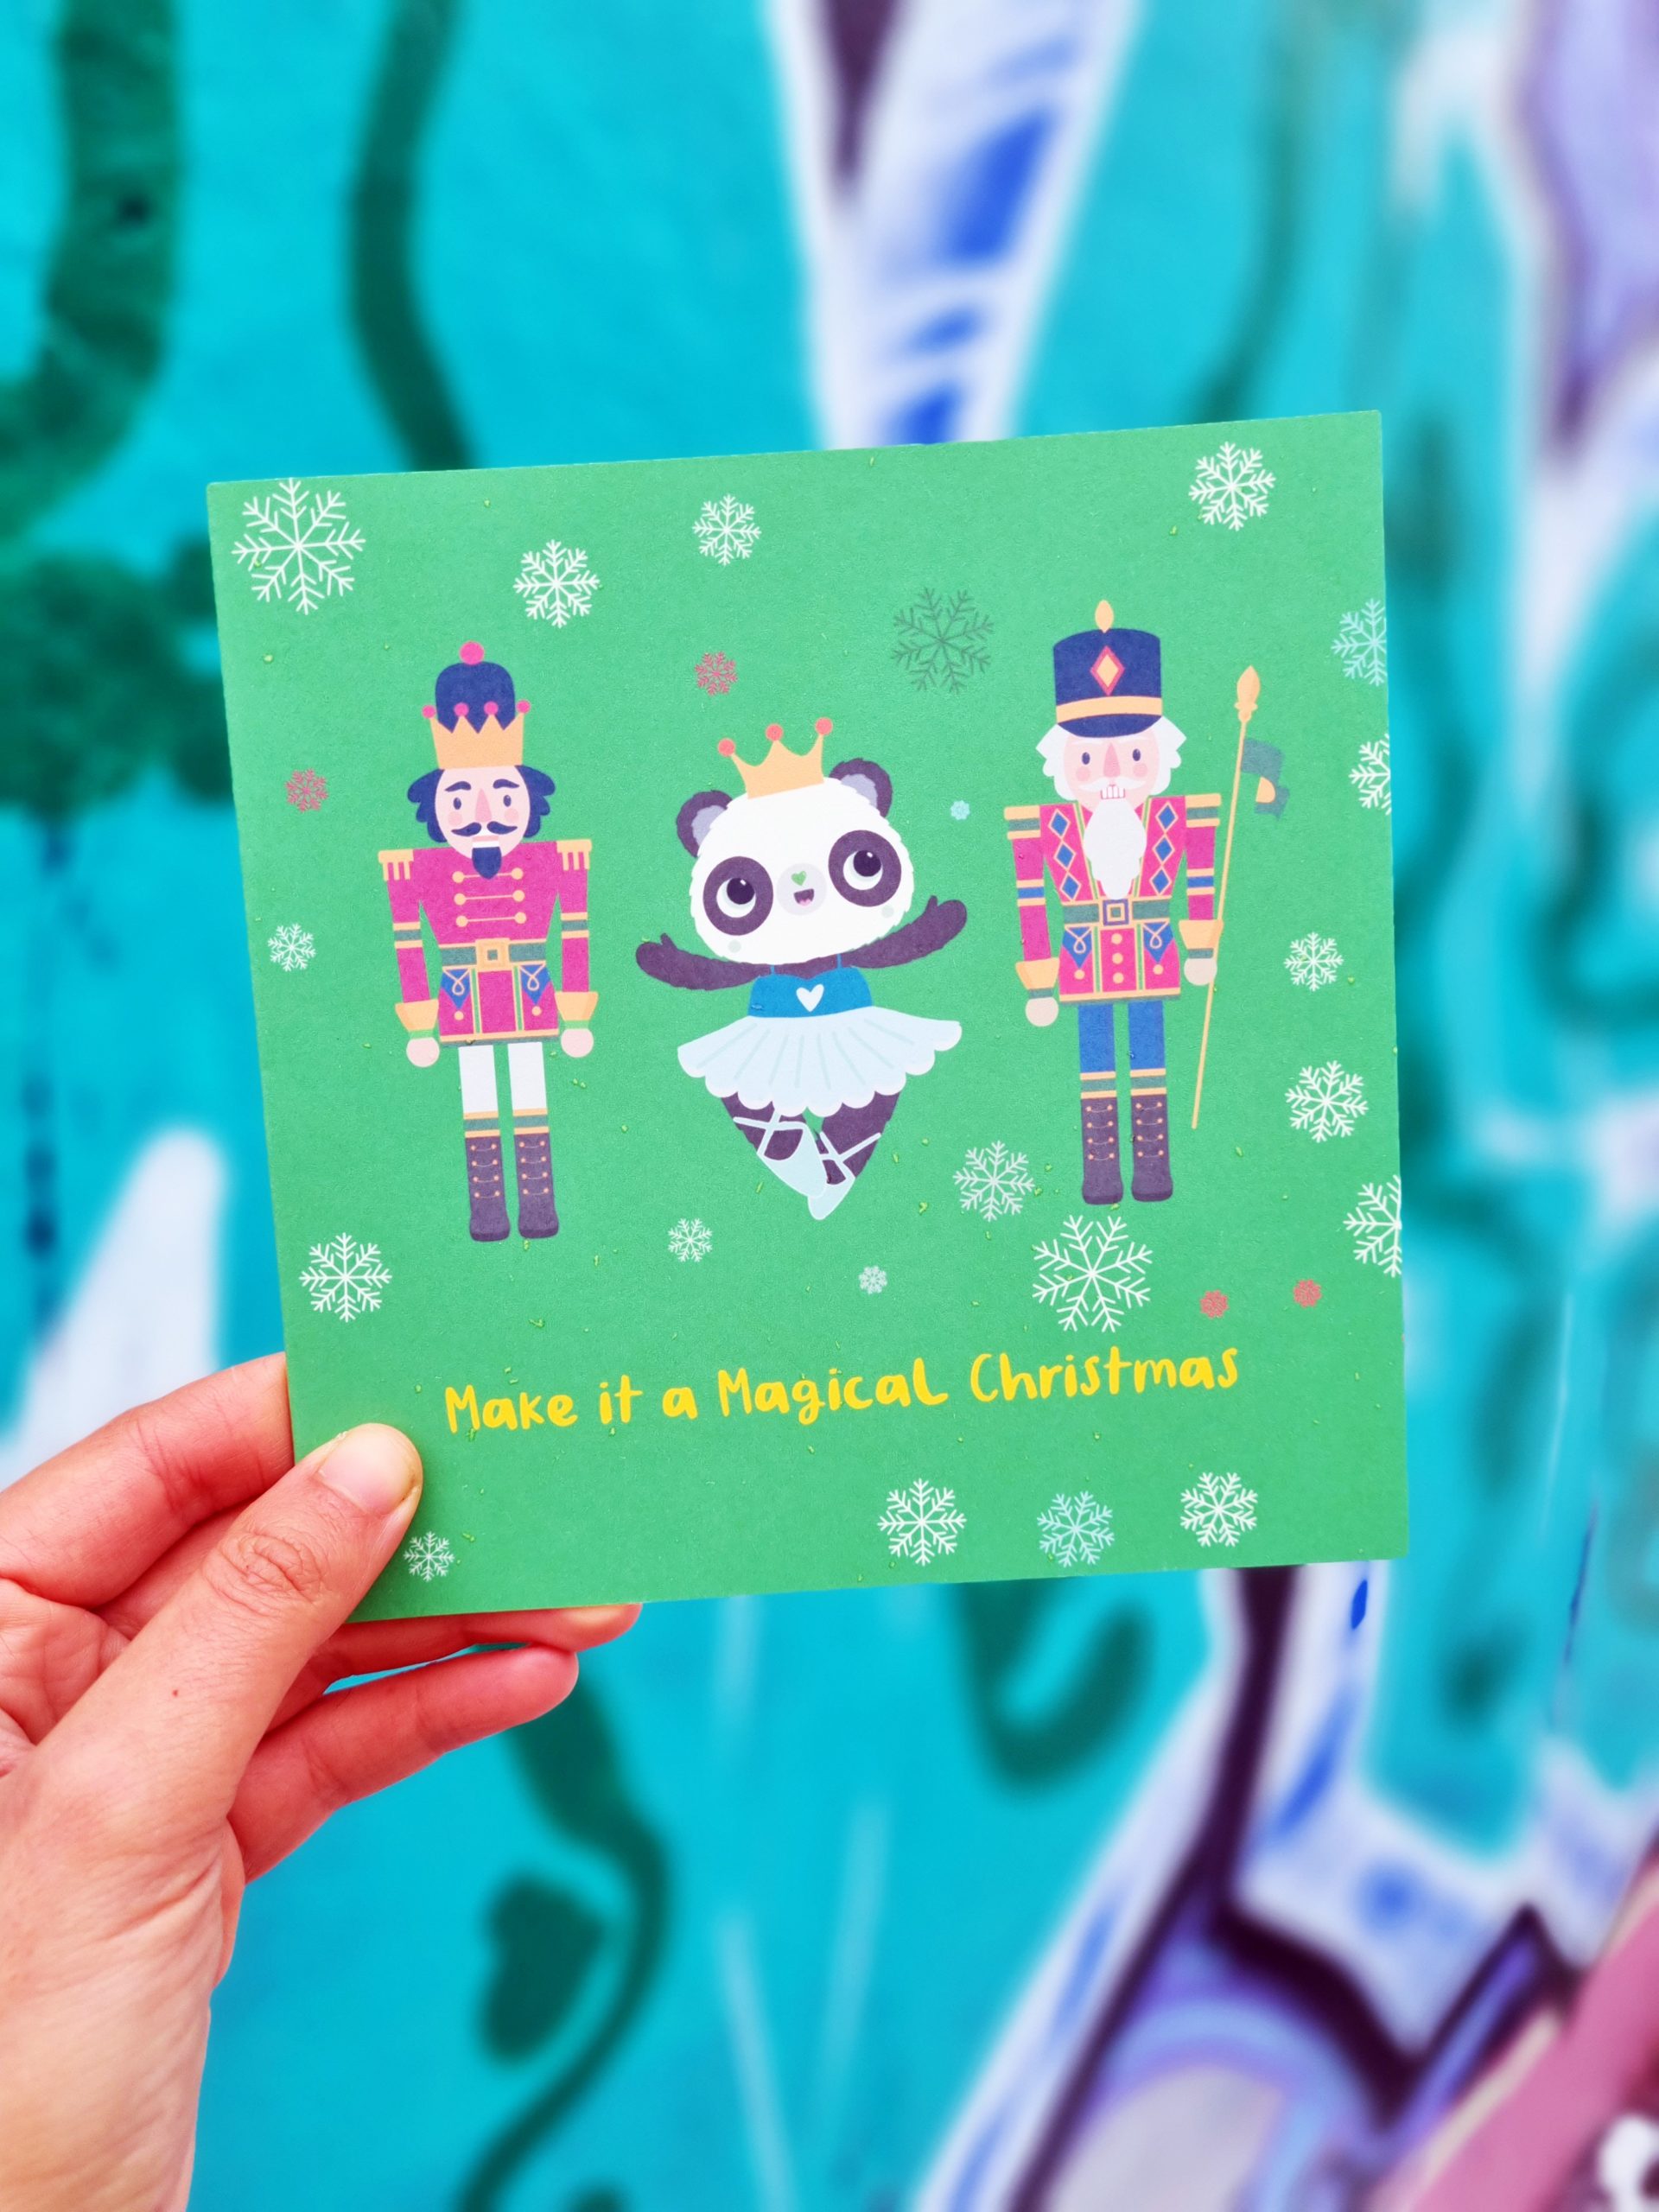 <img src="panda.jpg" alt="panda joy eco friendly gift ideas"/> 